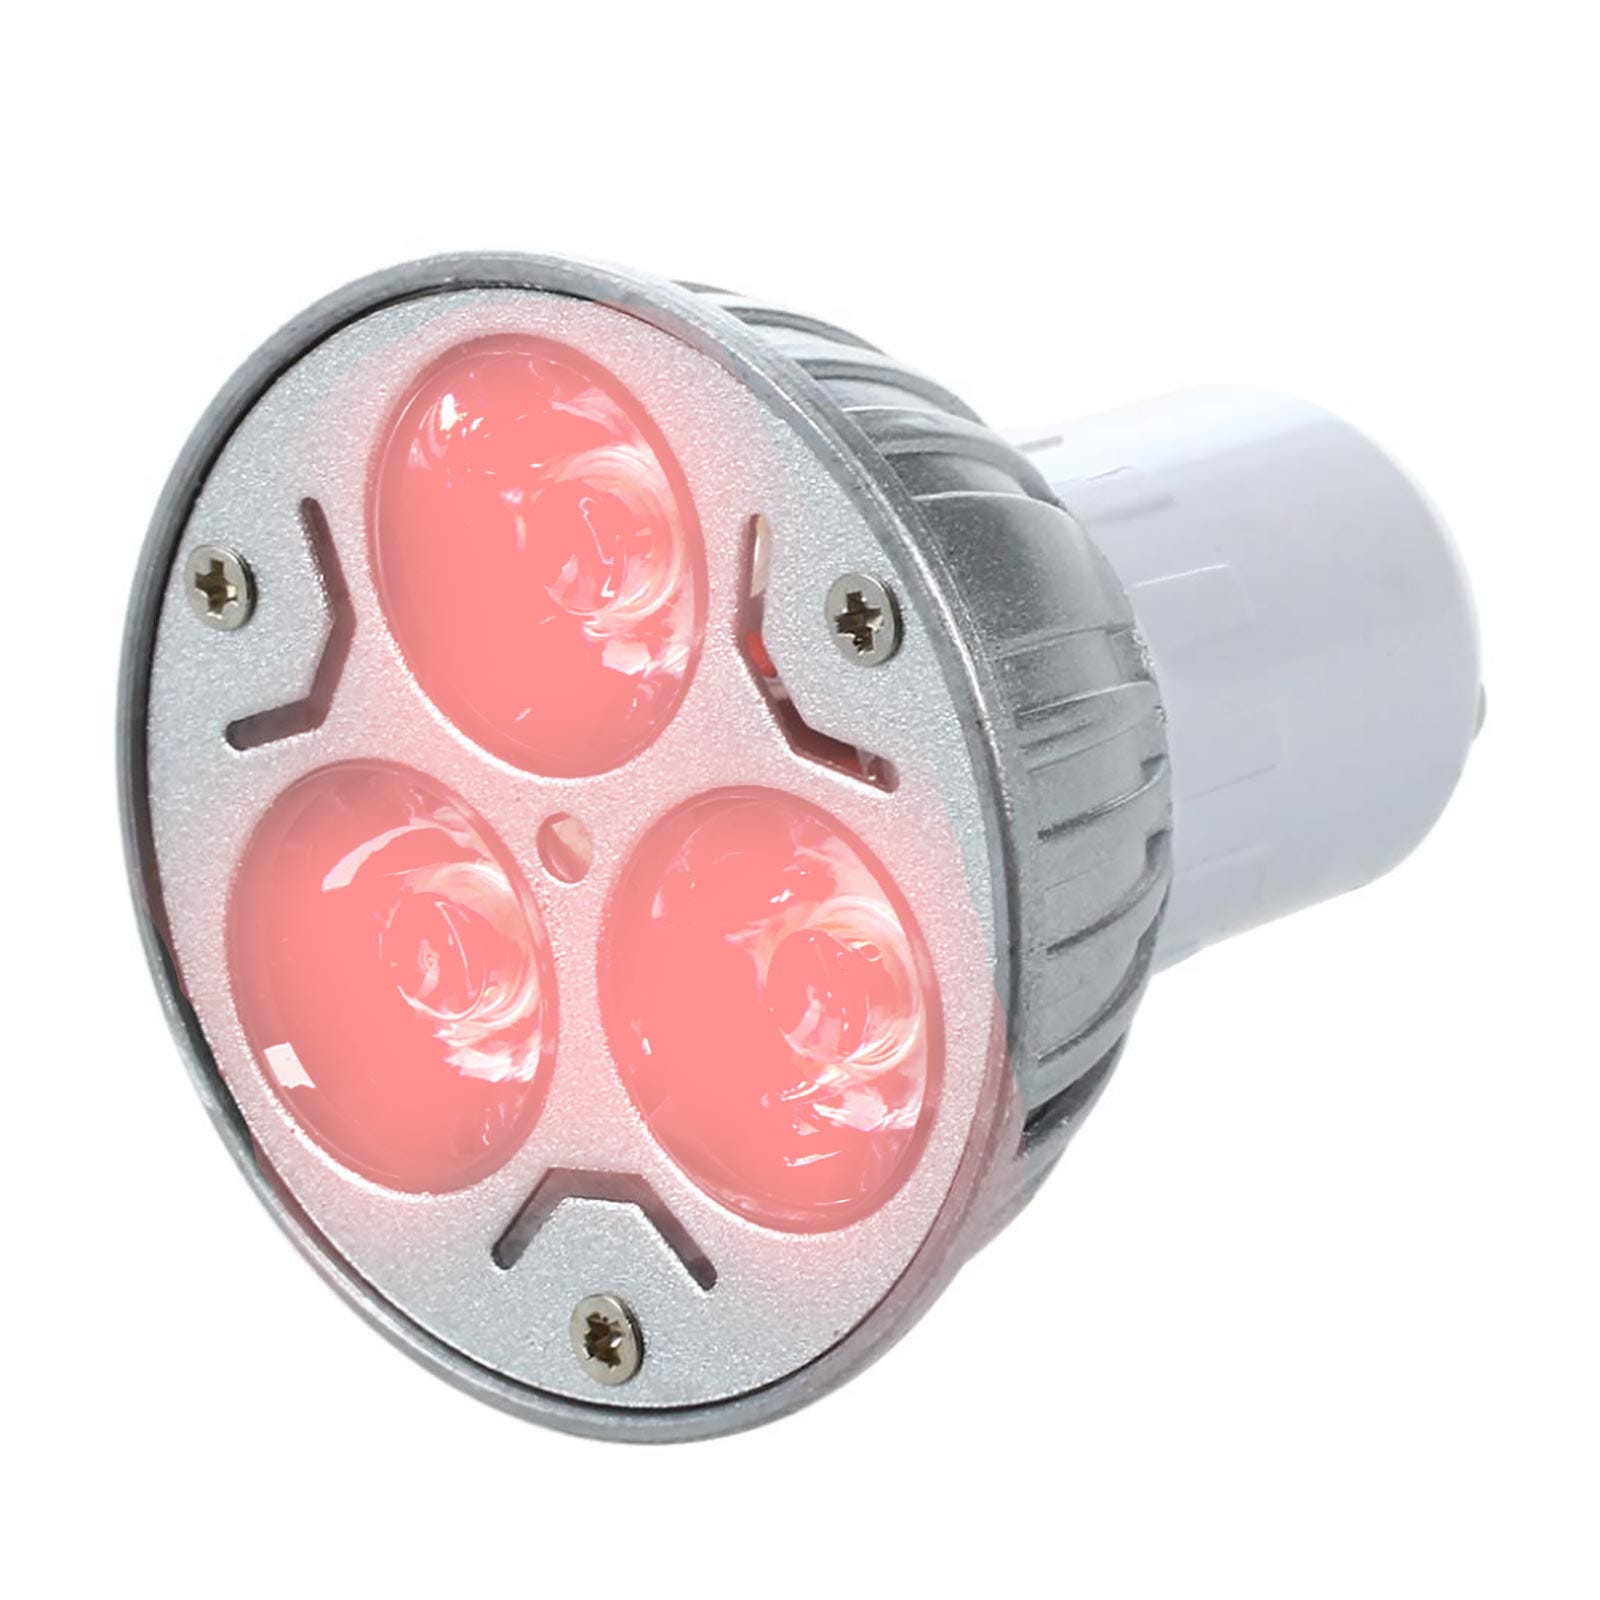 Faretto 3 LED High Power luce spot 3W GU10 lampada colorata ROSSA 230V